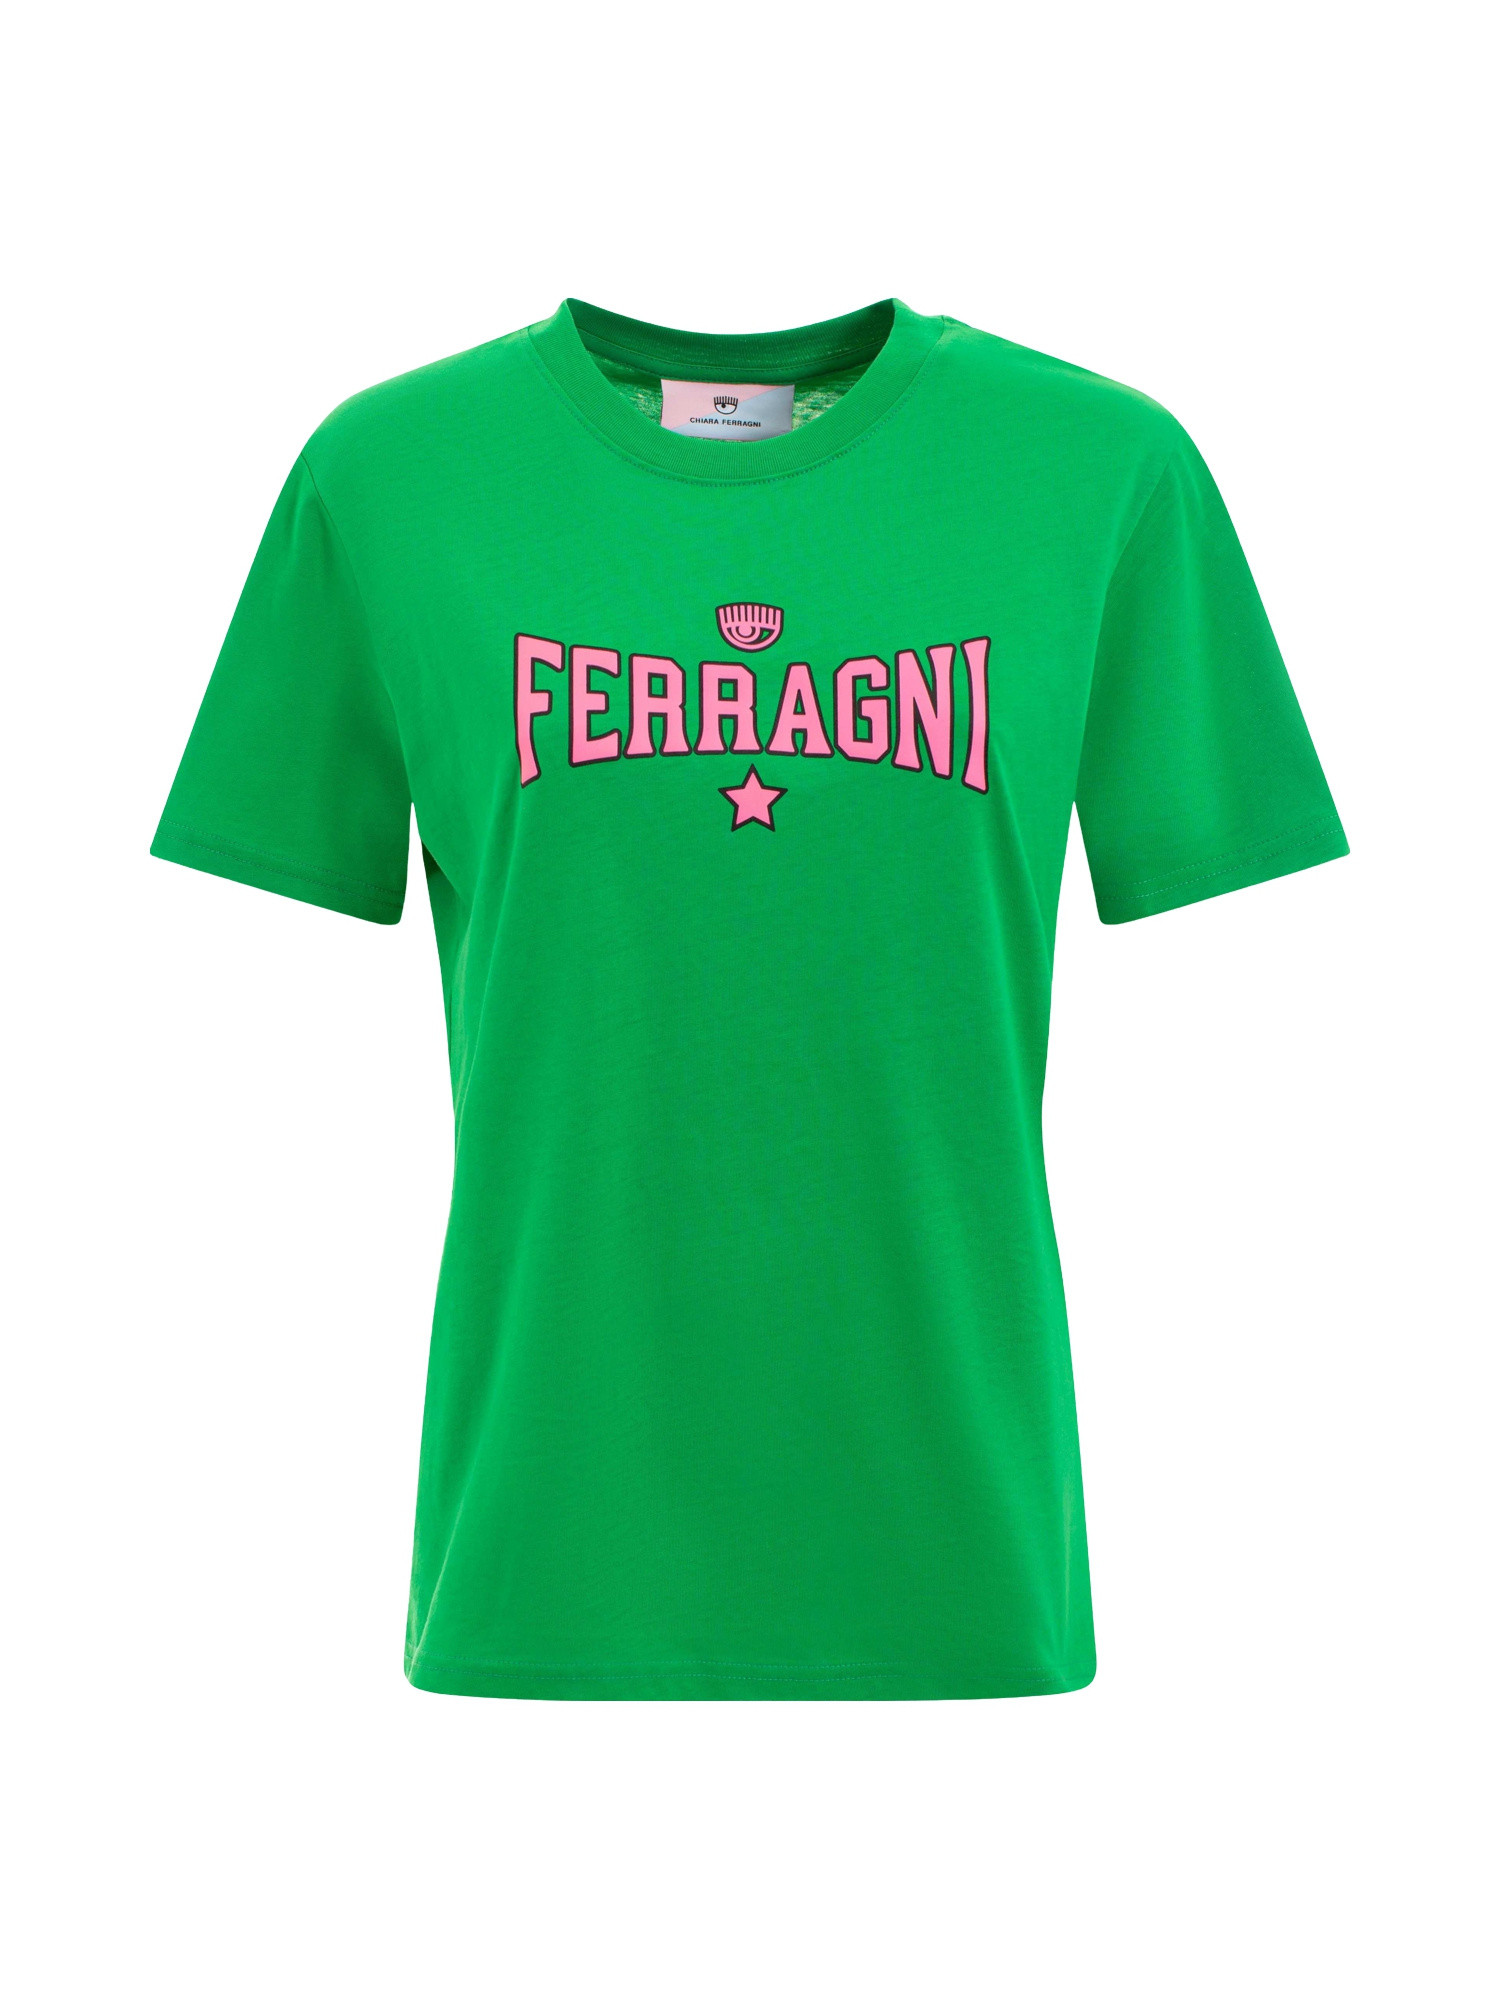 Chiara Ferragni - T-shirt with logo print, Green, large image number 0